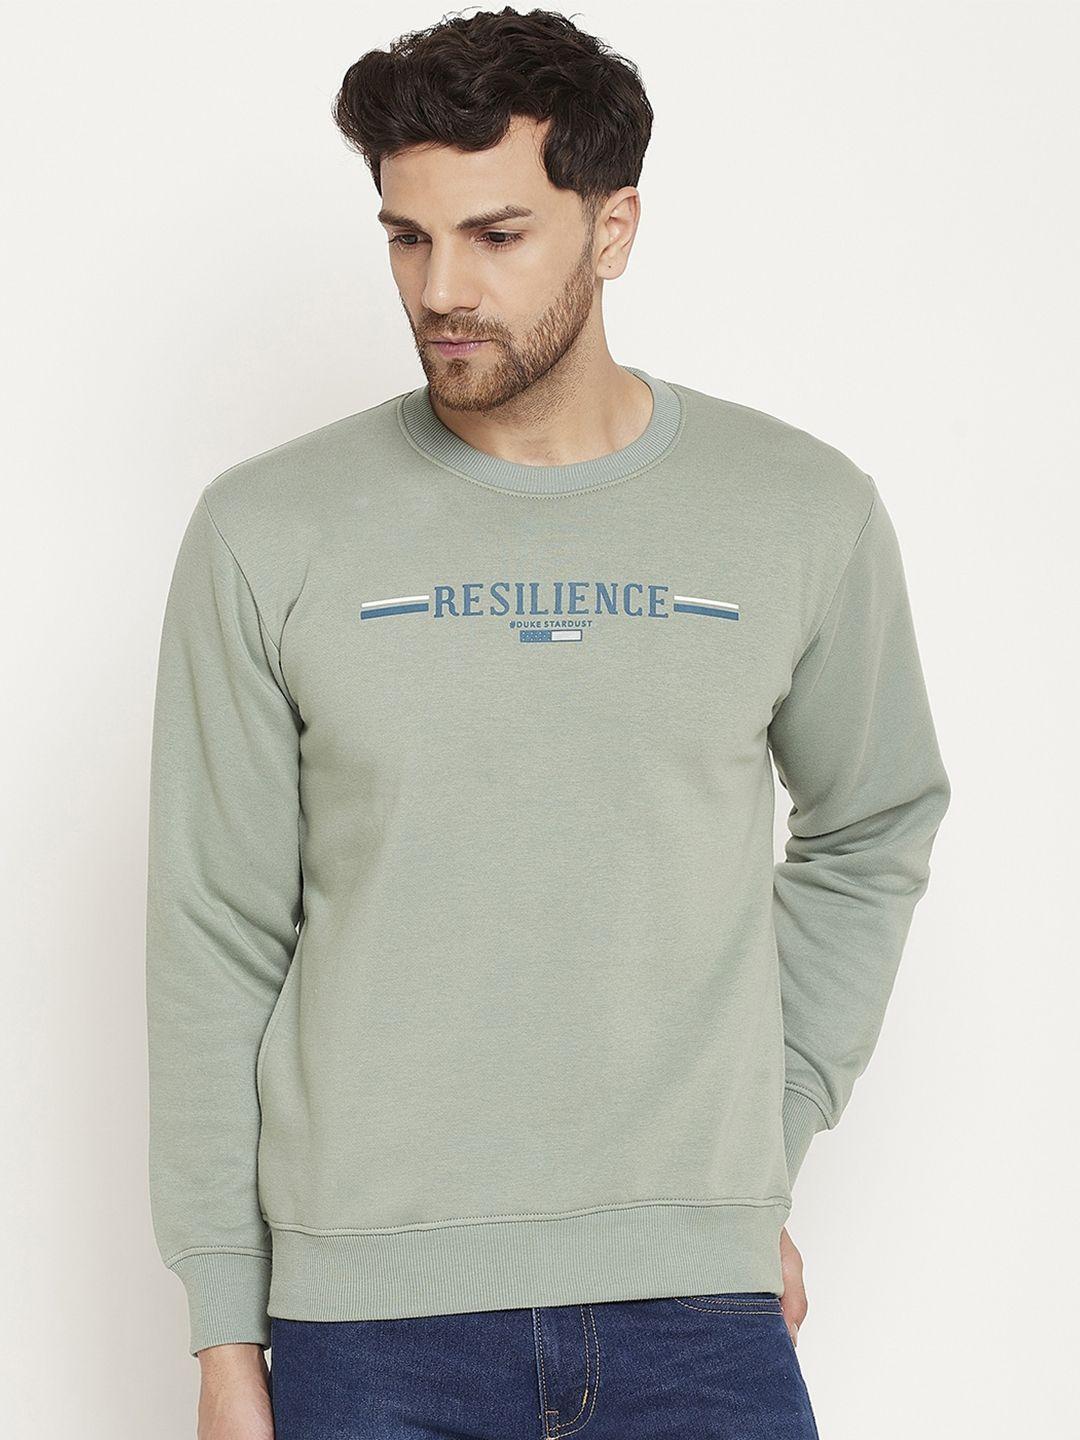 duke-typography-printed-fleece-pullover-sweatshirt